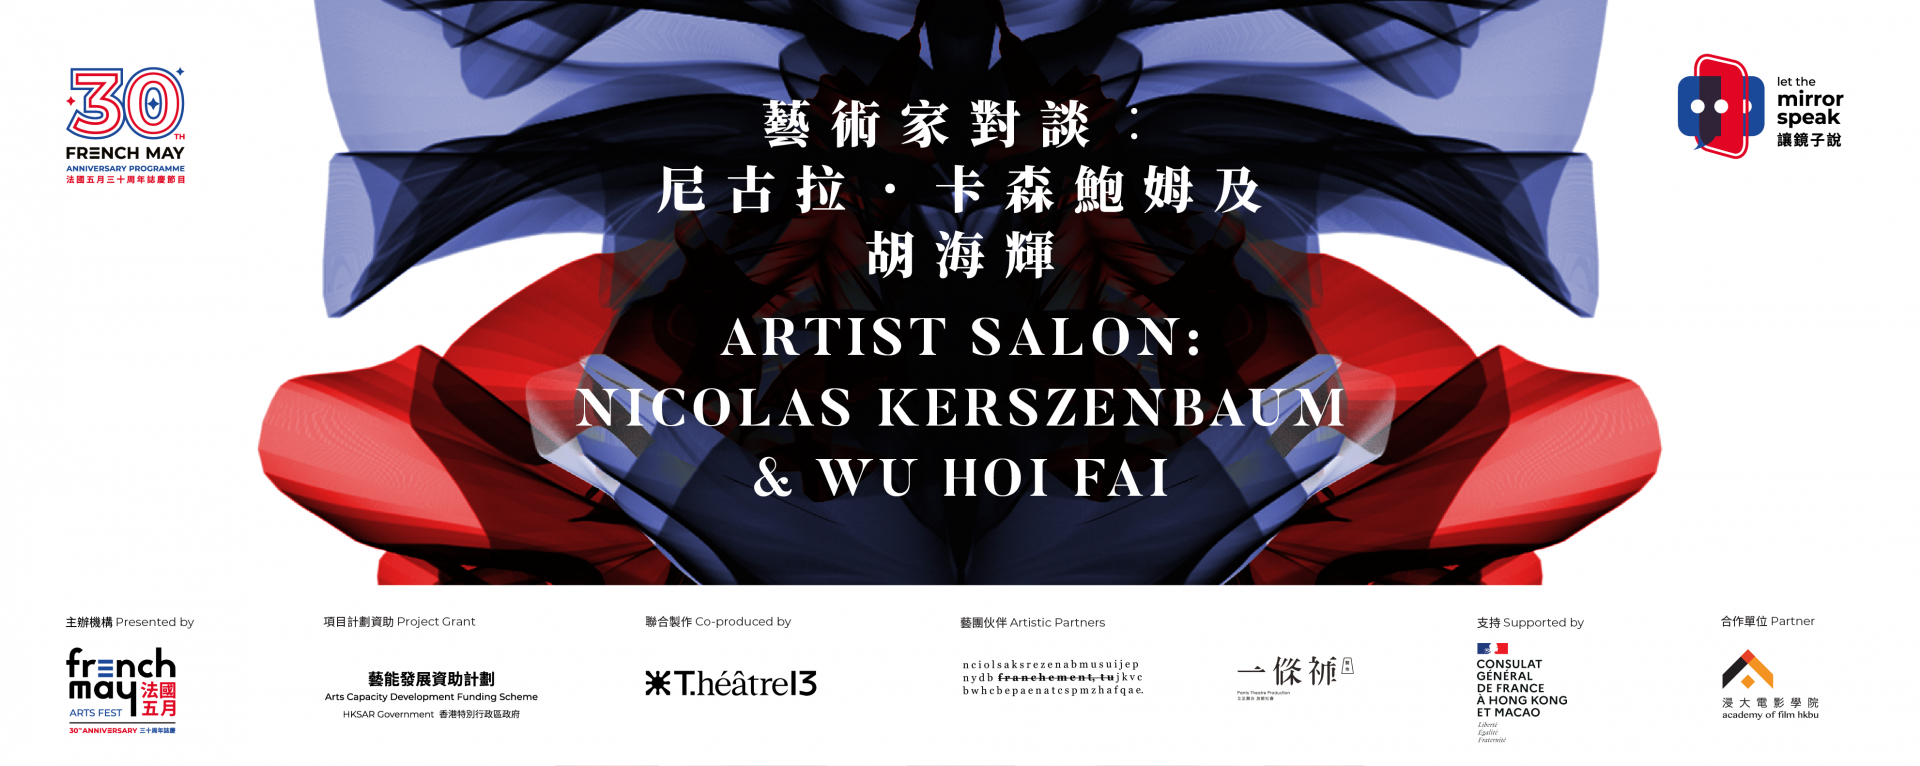 Artist salon: Nicolas Kerszenbaum & Wu Hoi Fai